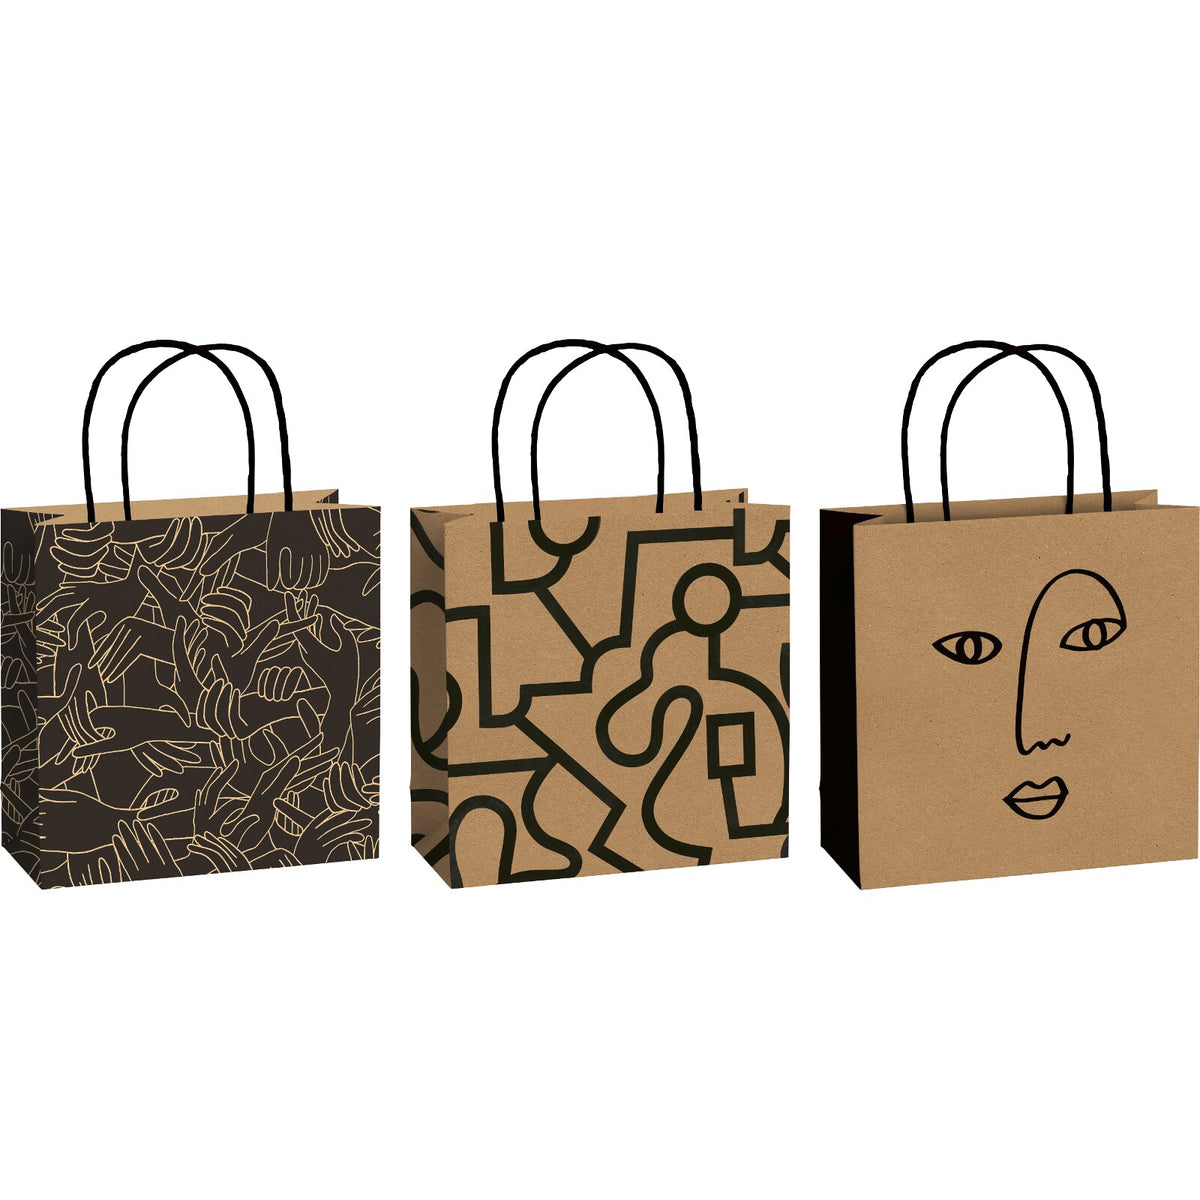 Taio Artful Medium Gift Bags 3 Pk by penny black